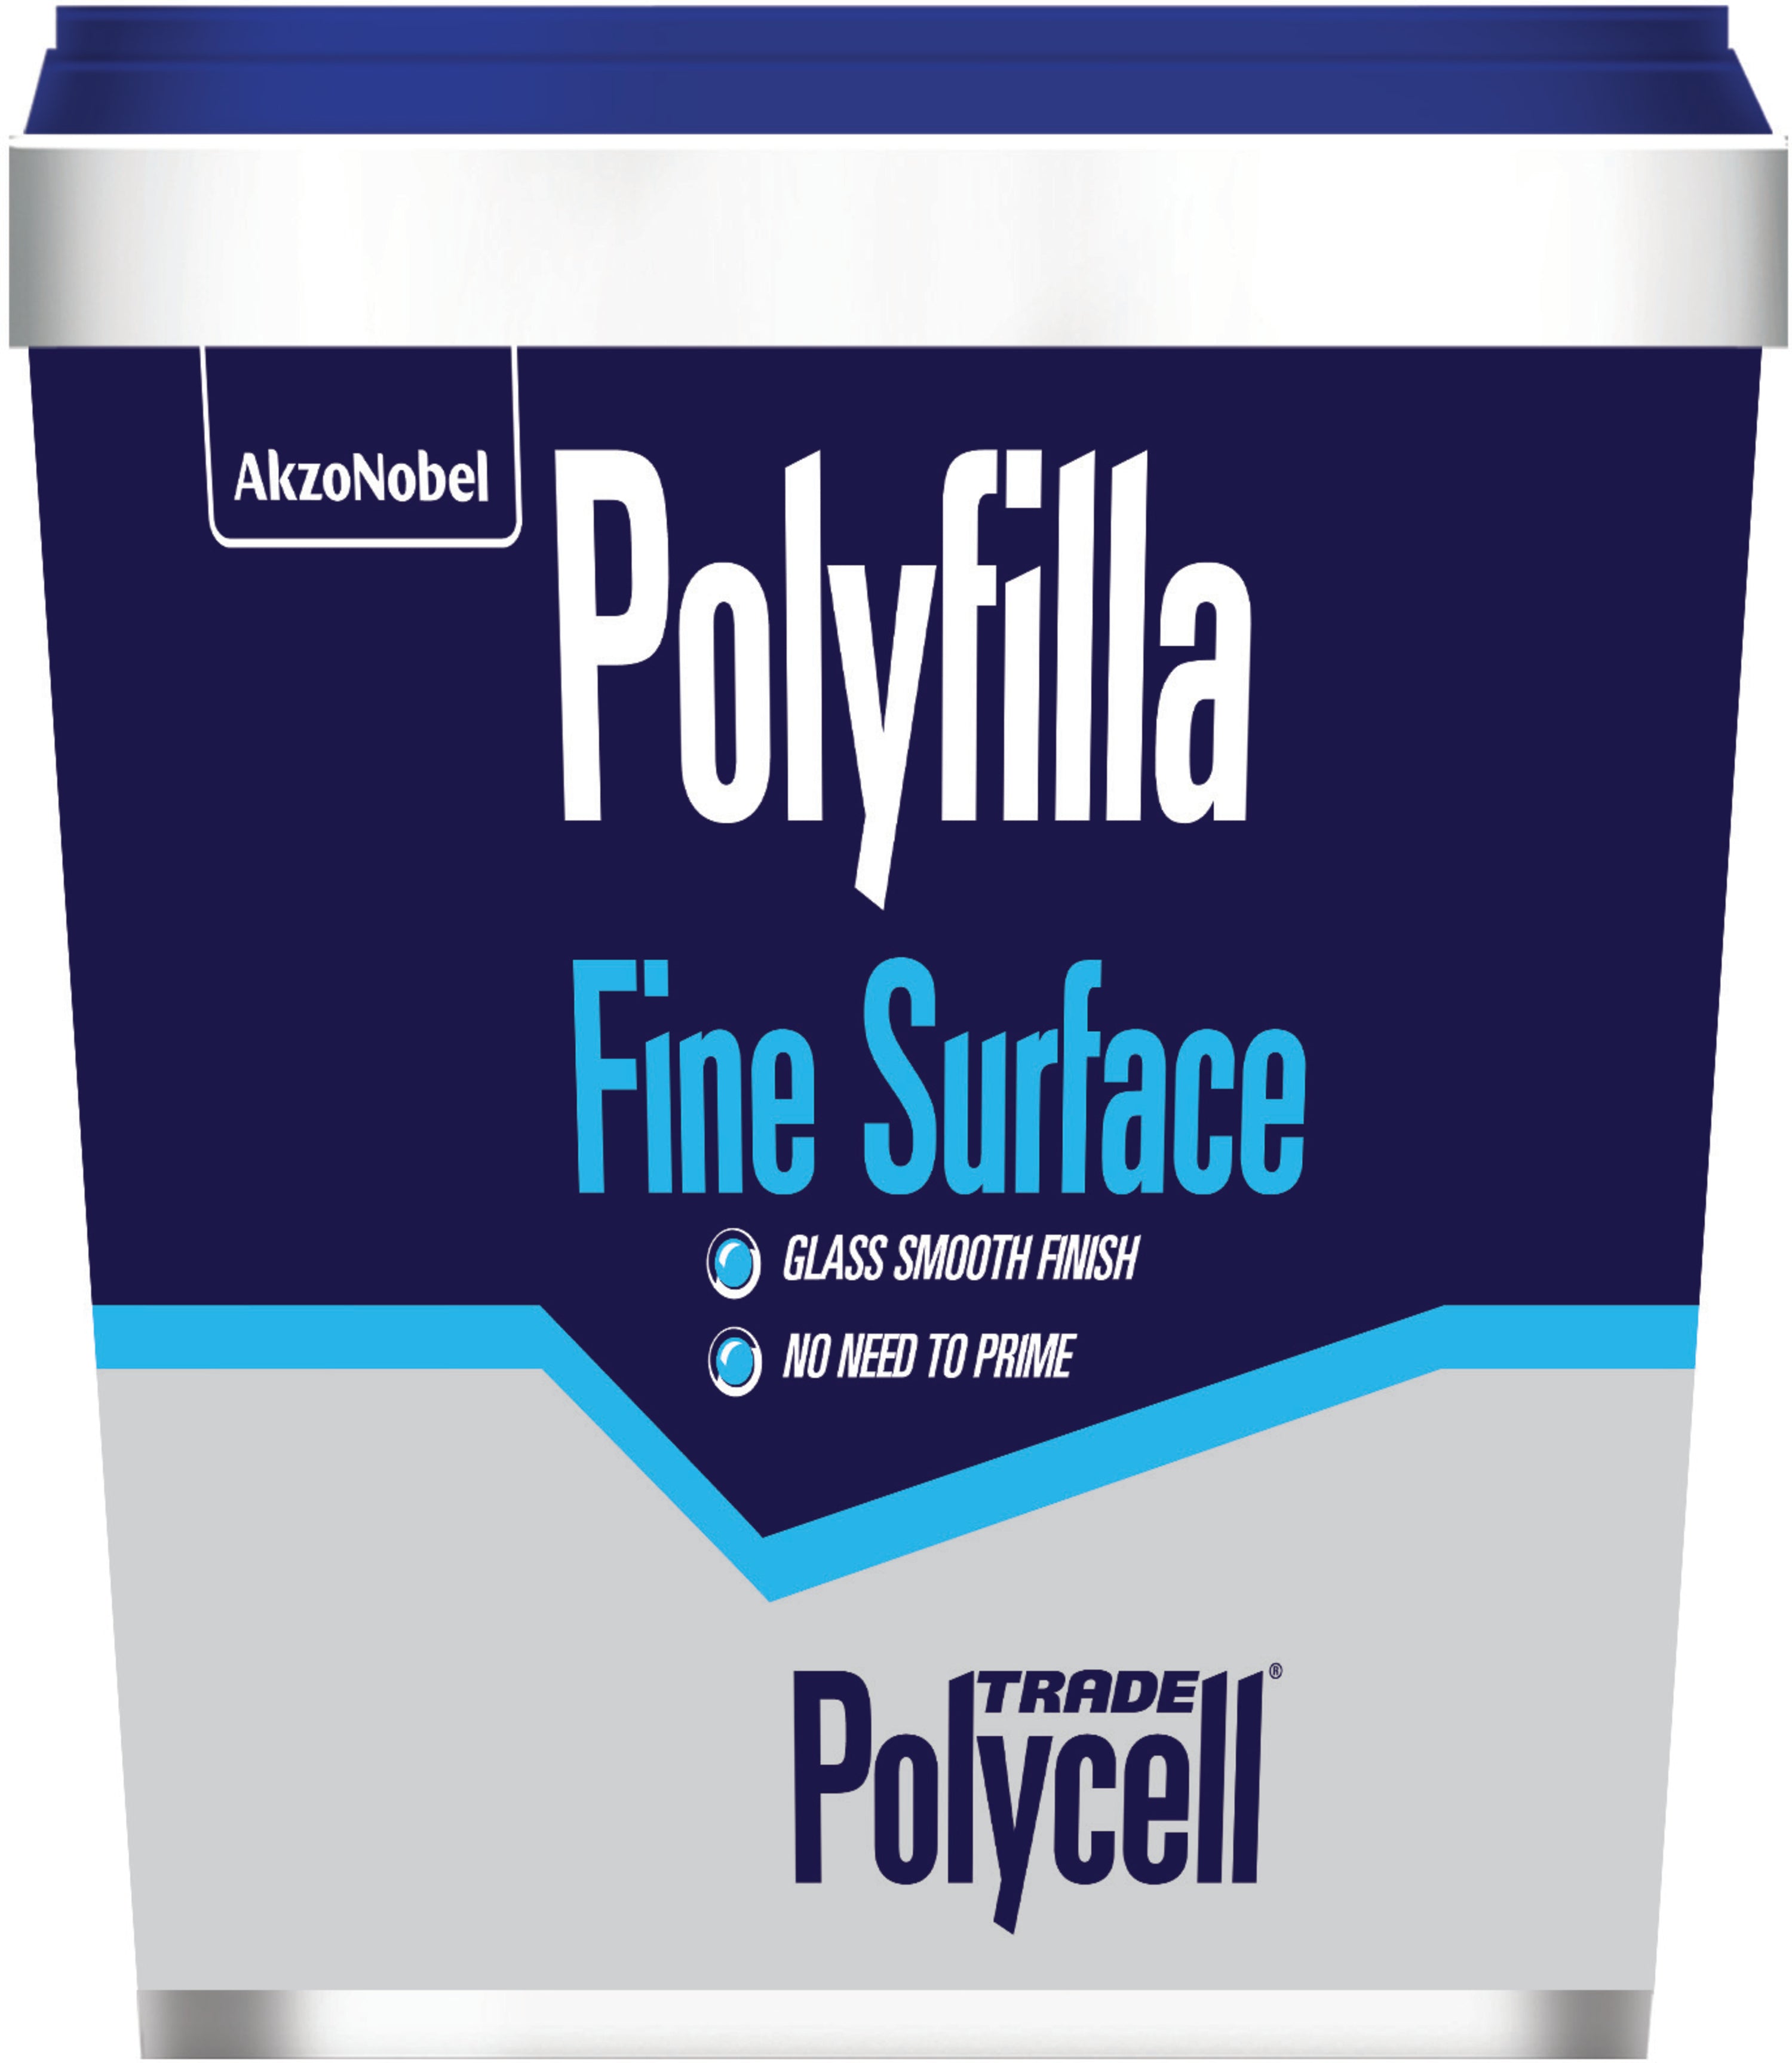 Polycell Trade - Polyfilla Fine Surface Filler